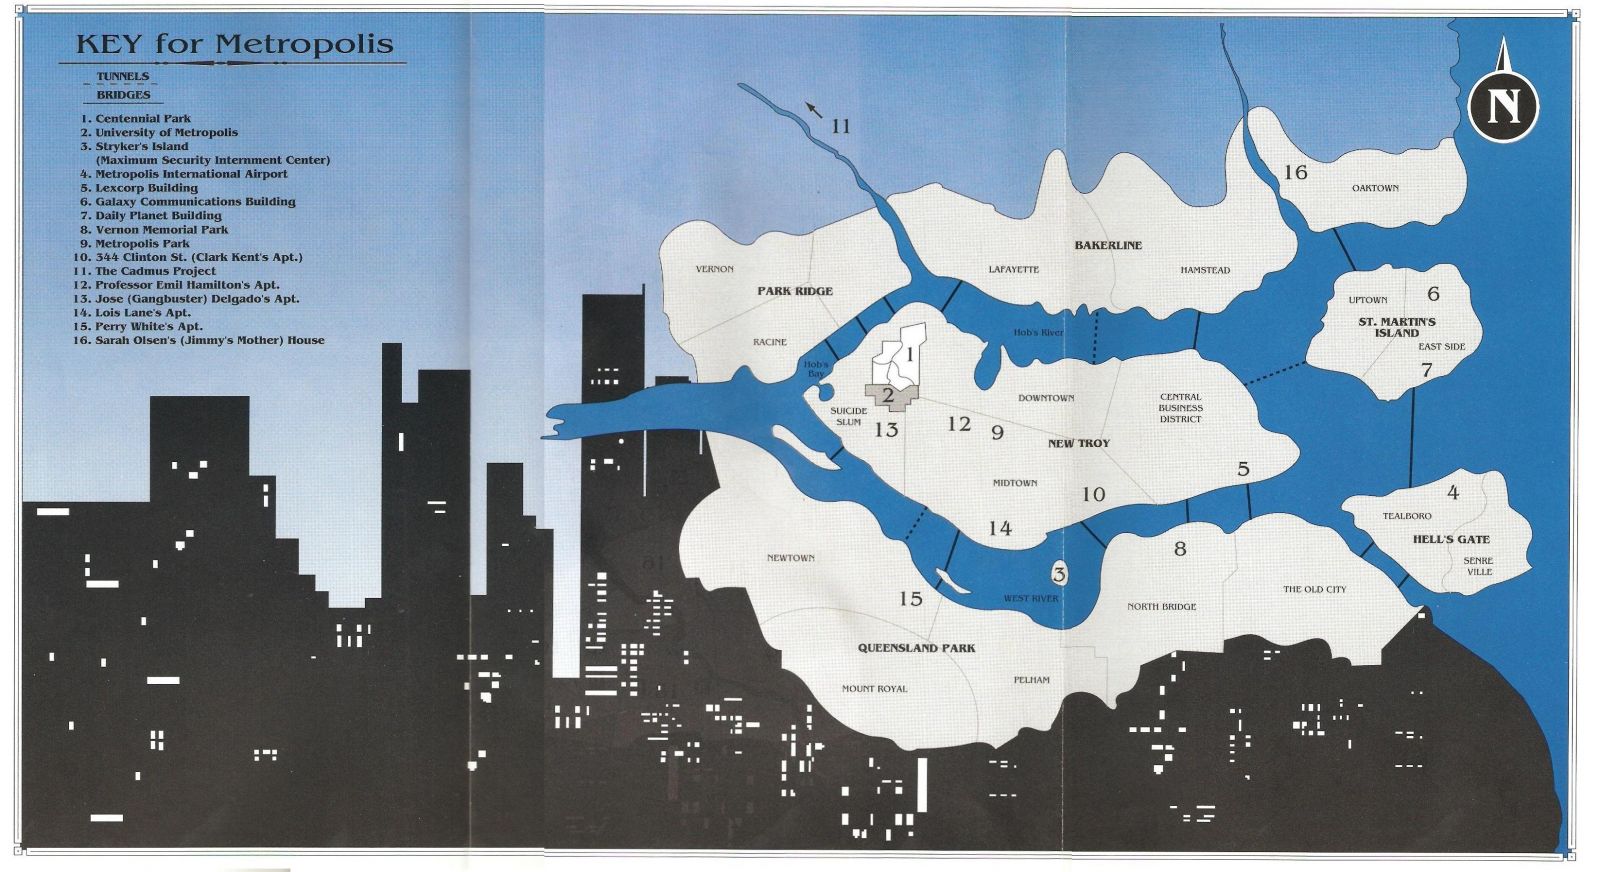 gotham city map